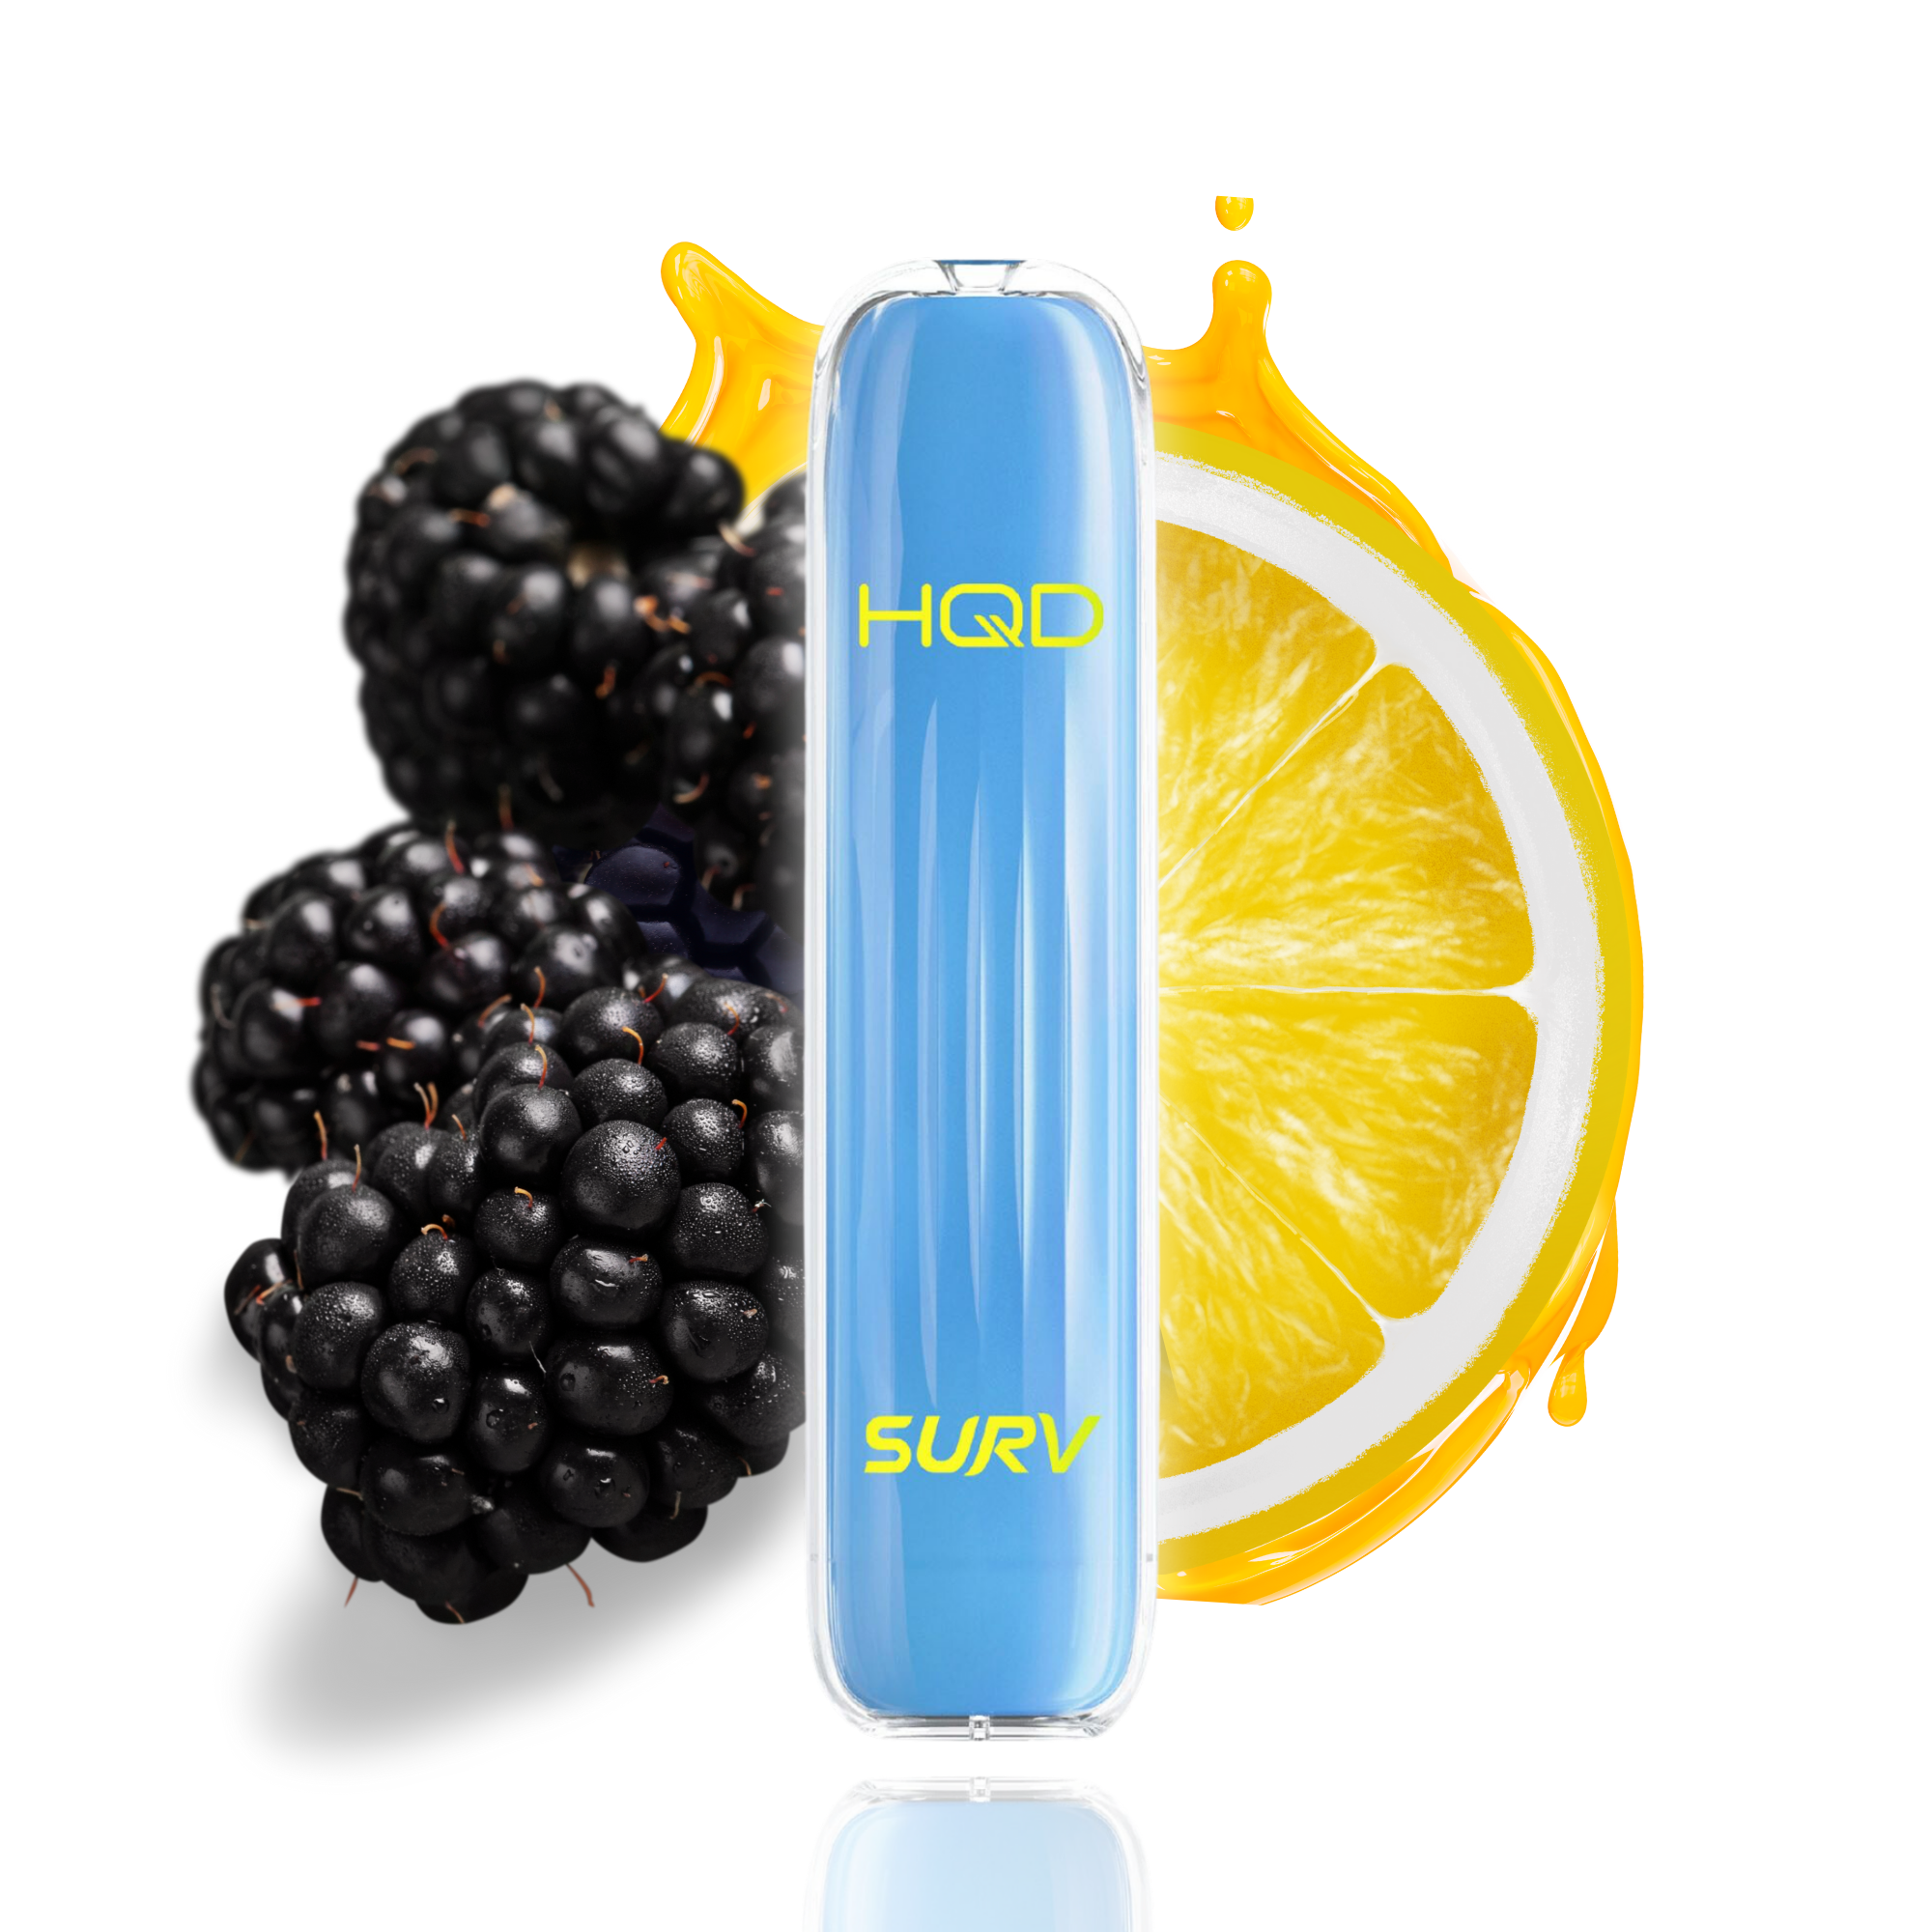 HQD Surv Blurry Berry Lemon 18mg/ml